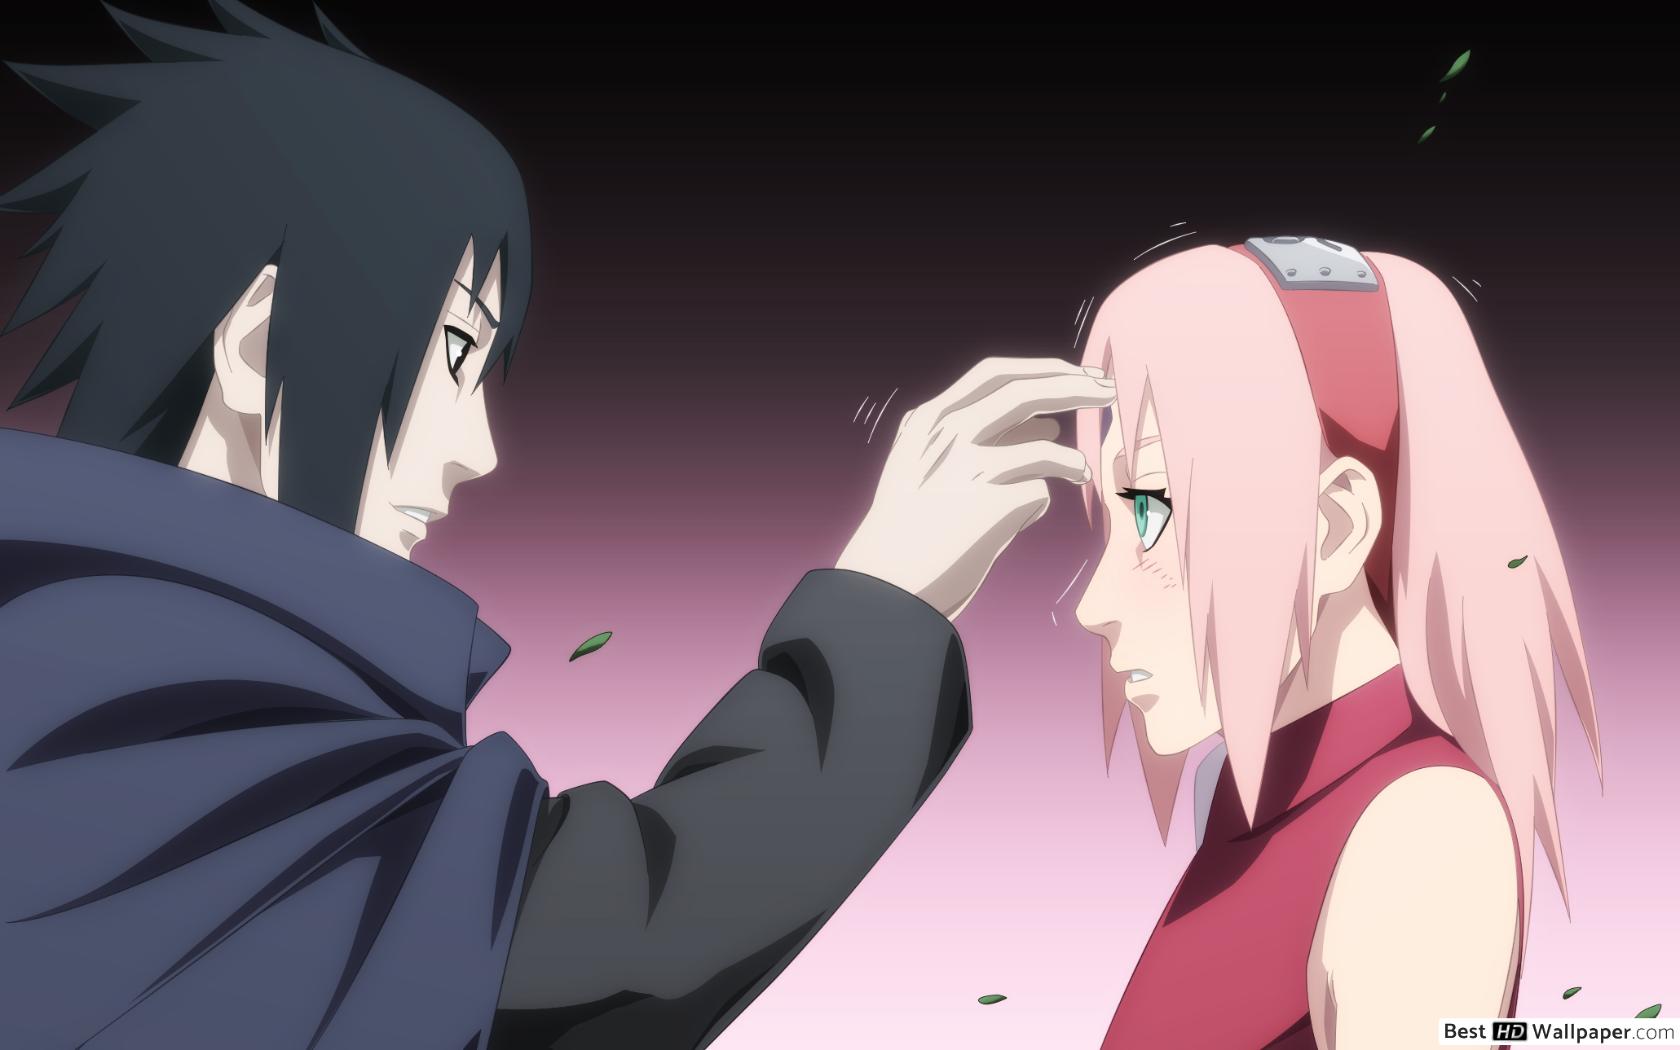 Sakura e Sasuke vendo as estrelas juntos 🌠